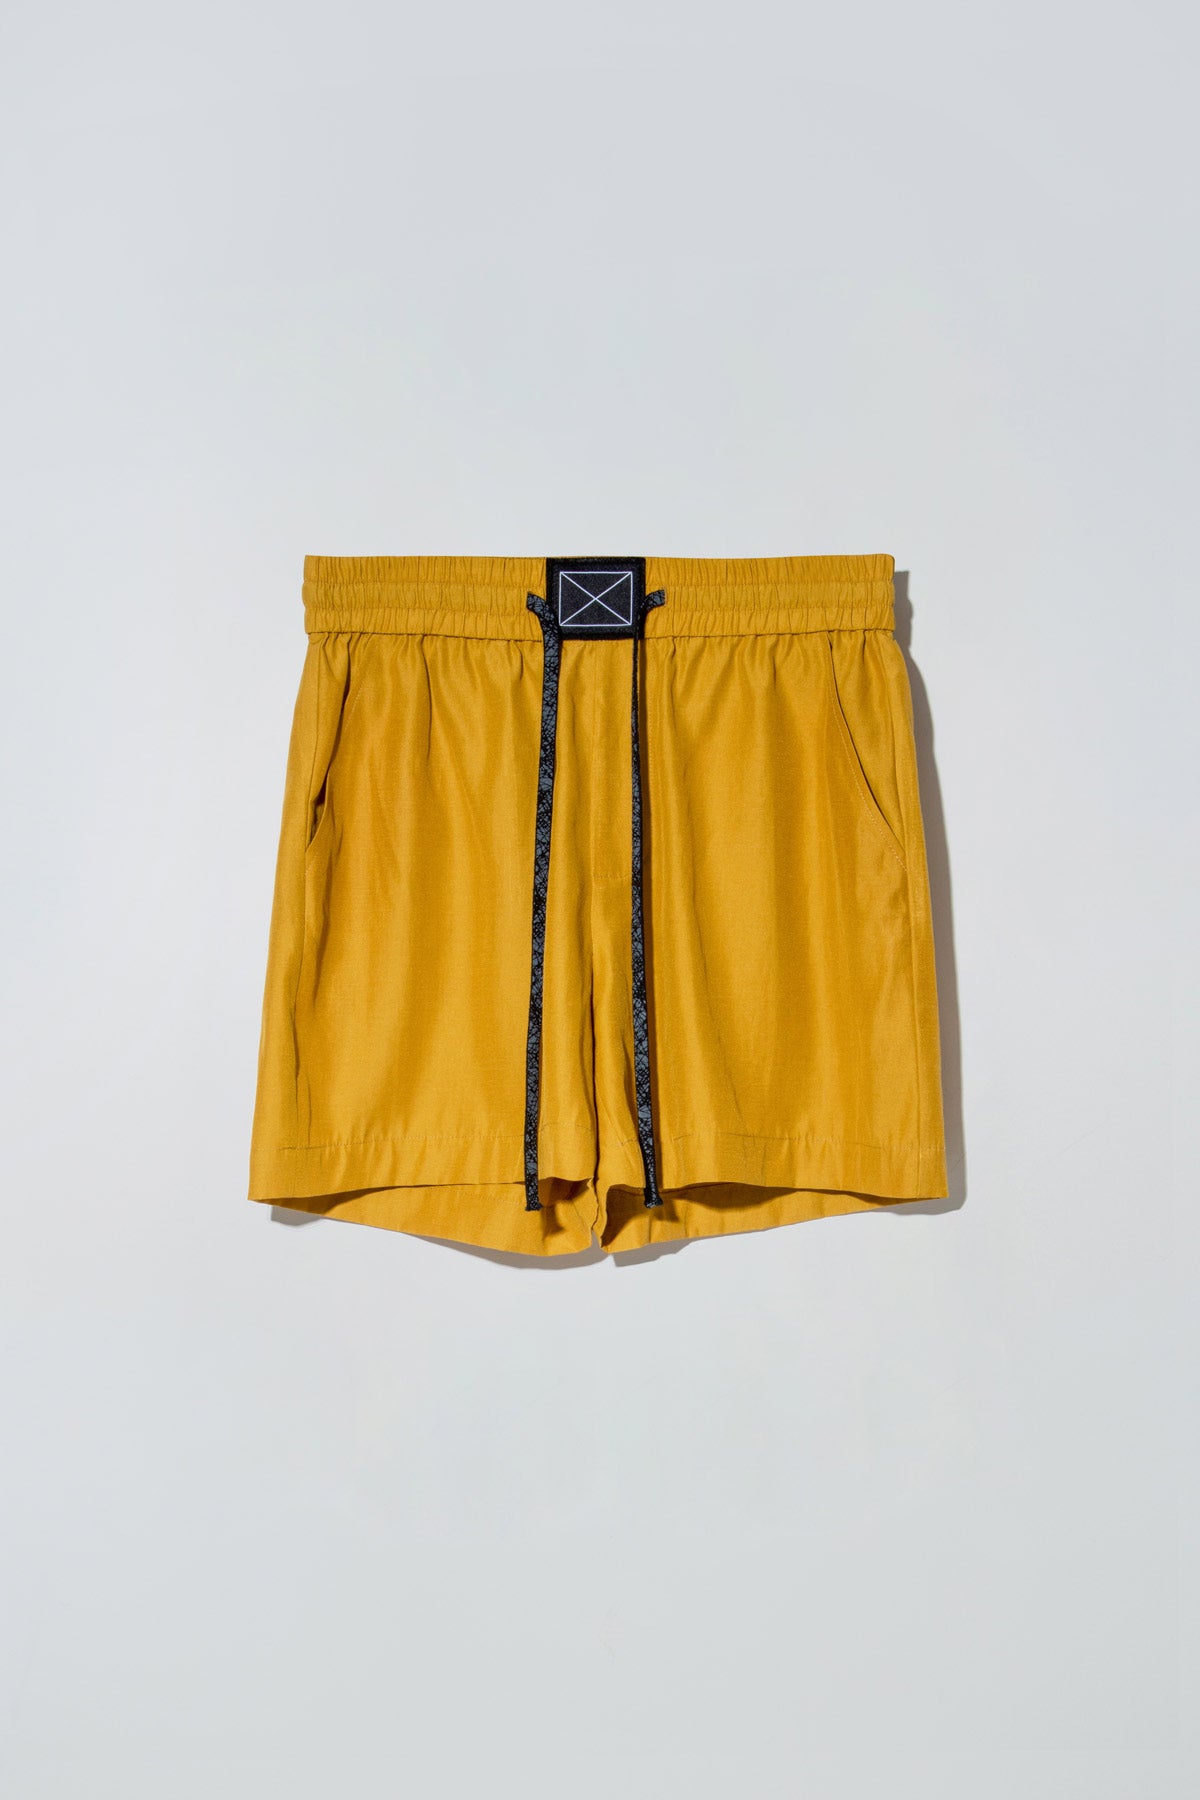 Billie Shorts Mustard Yellow